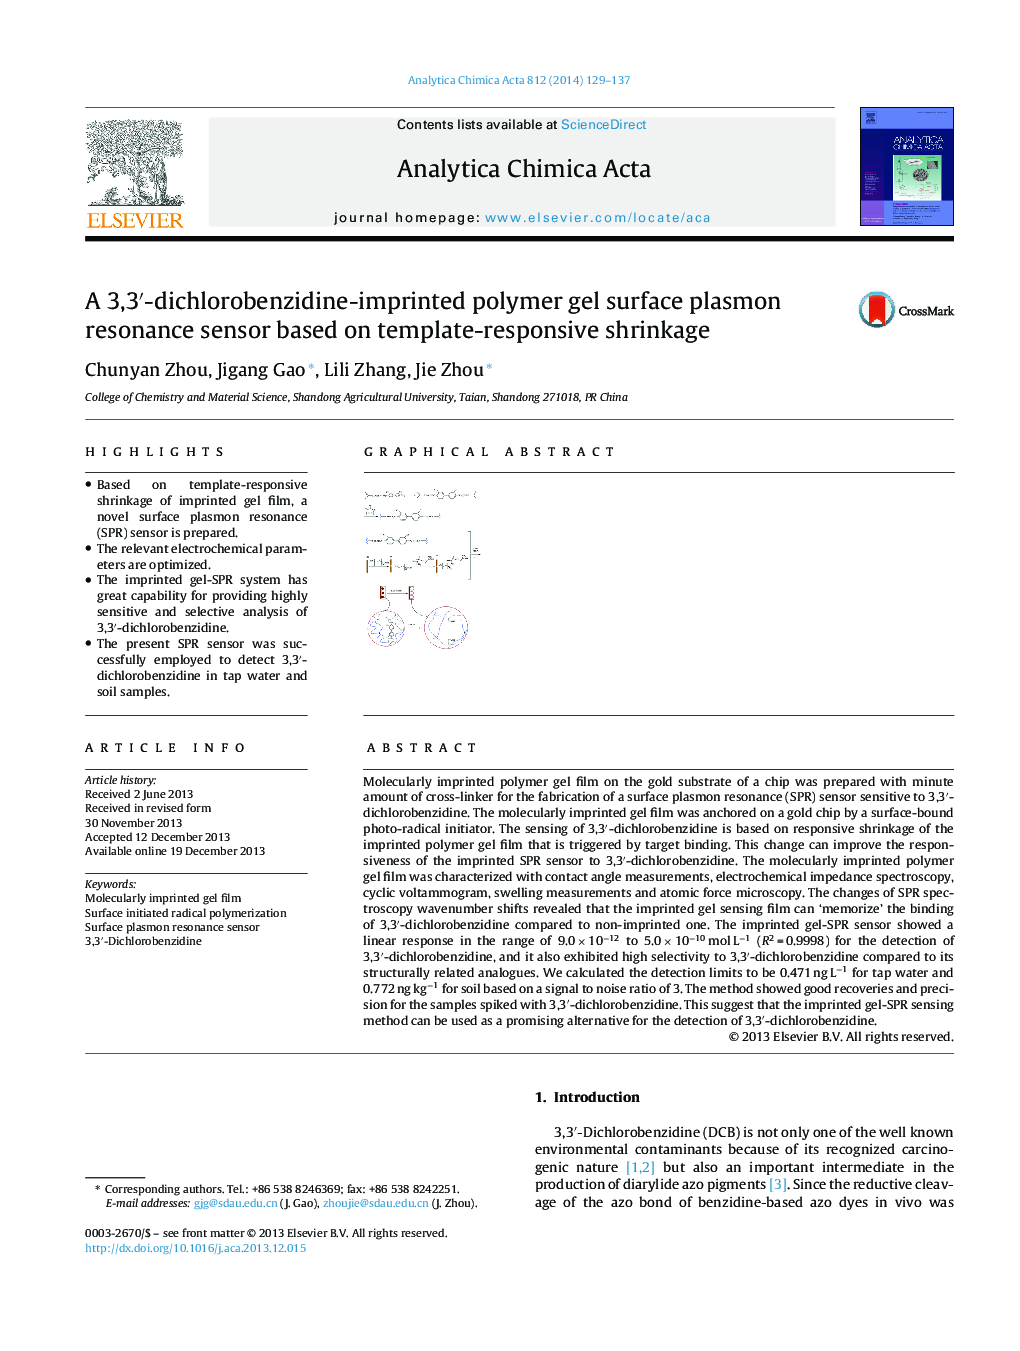 A 3,3′-dichlorobenzidine-imprinted polymer gel surface plasmon resonance sensor based on template-responsive shrinkage